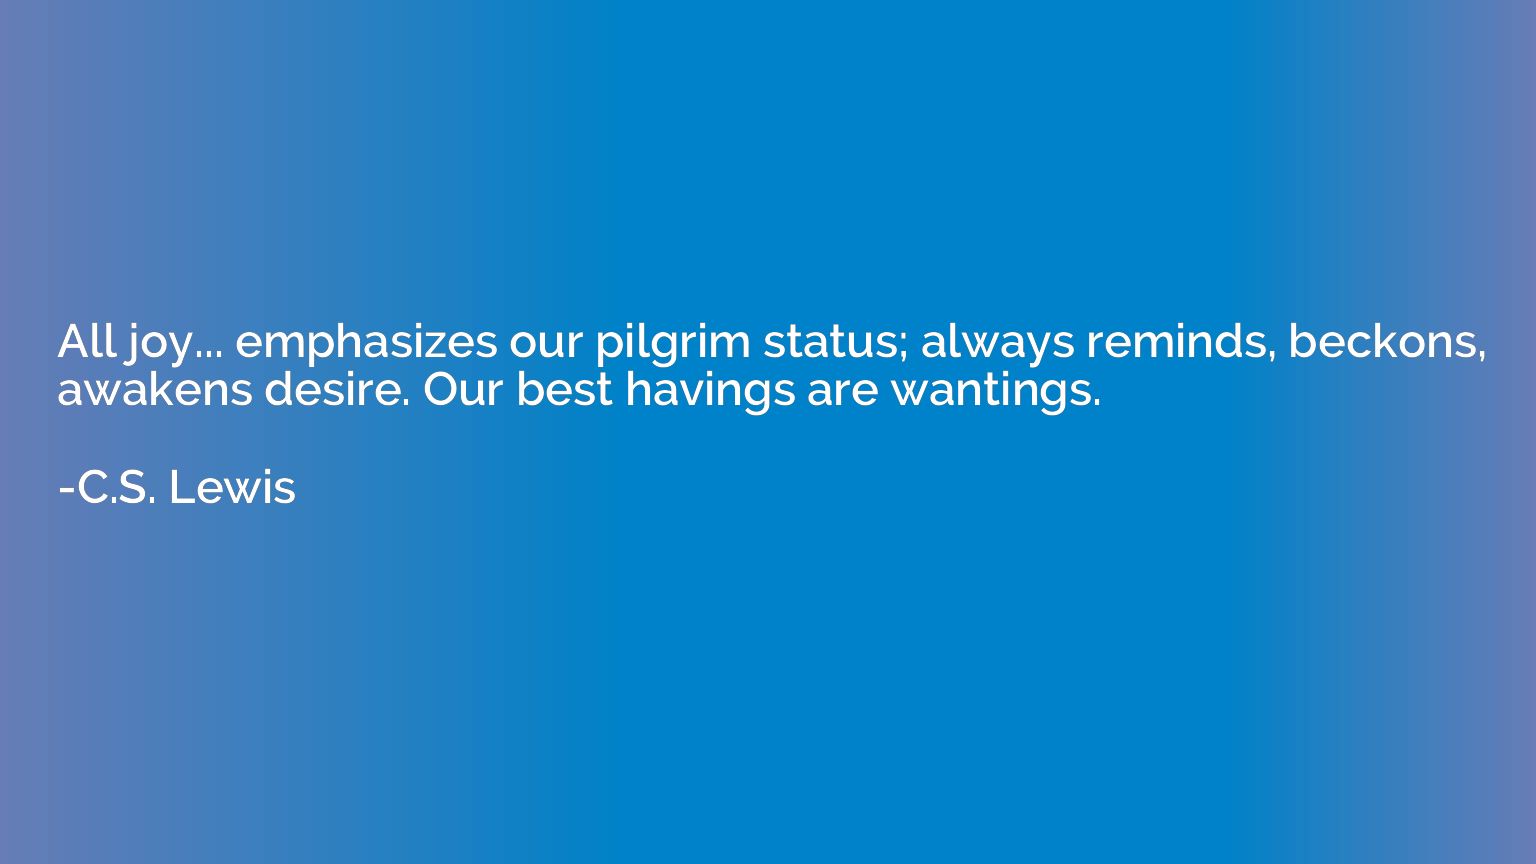 All joy... emphasizes our pilgrim status; always reminds, be